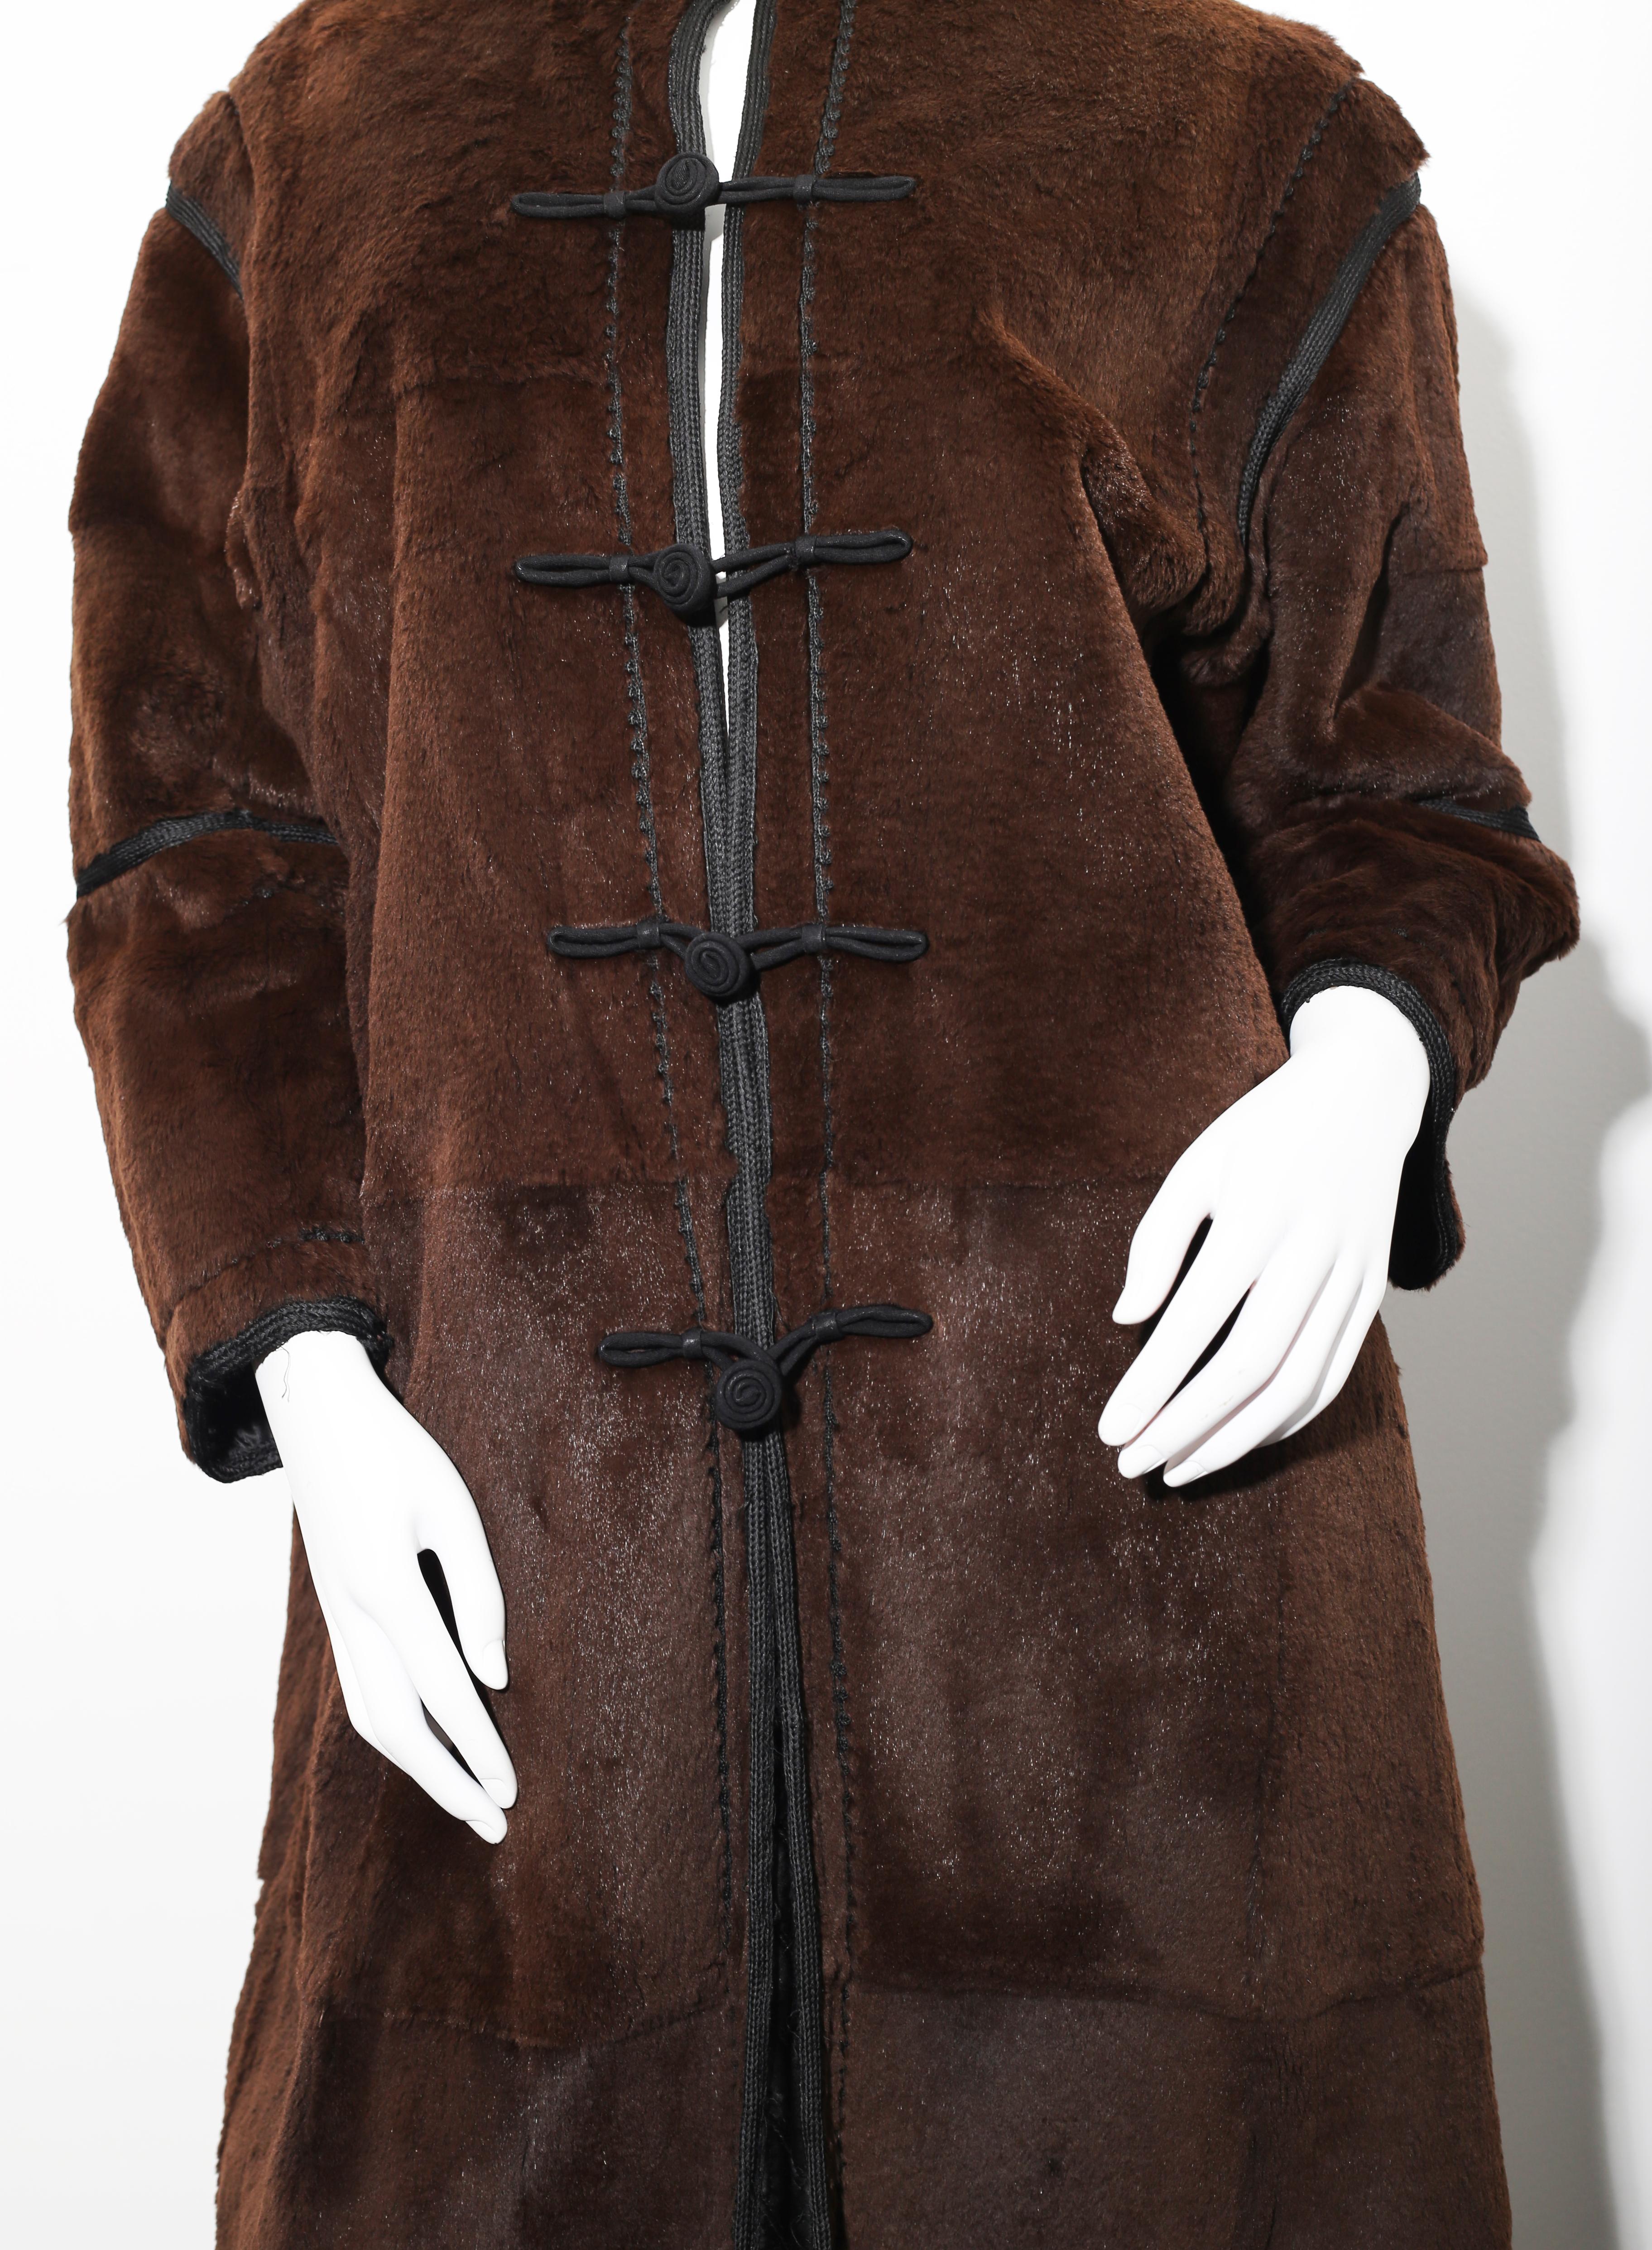 Armani Oriental Style Brown mink Leather Coat with black silk trimmings
Size: 42 FR / 46 IT/ 10 US / 14 UK / EU L
Condition: MINT 
COAT MEASURES:
LENGTH 105cm 41,33